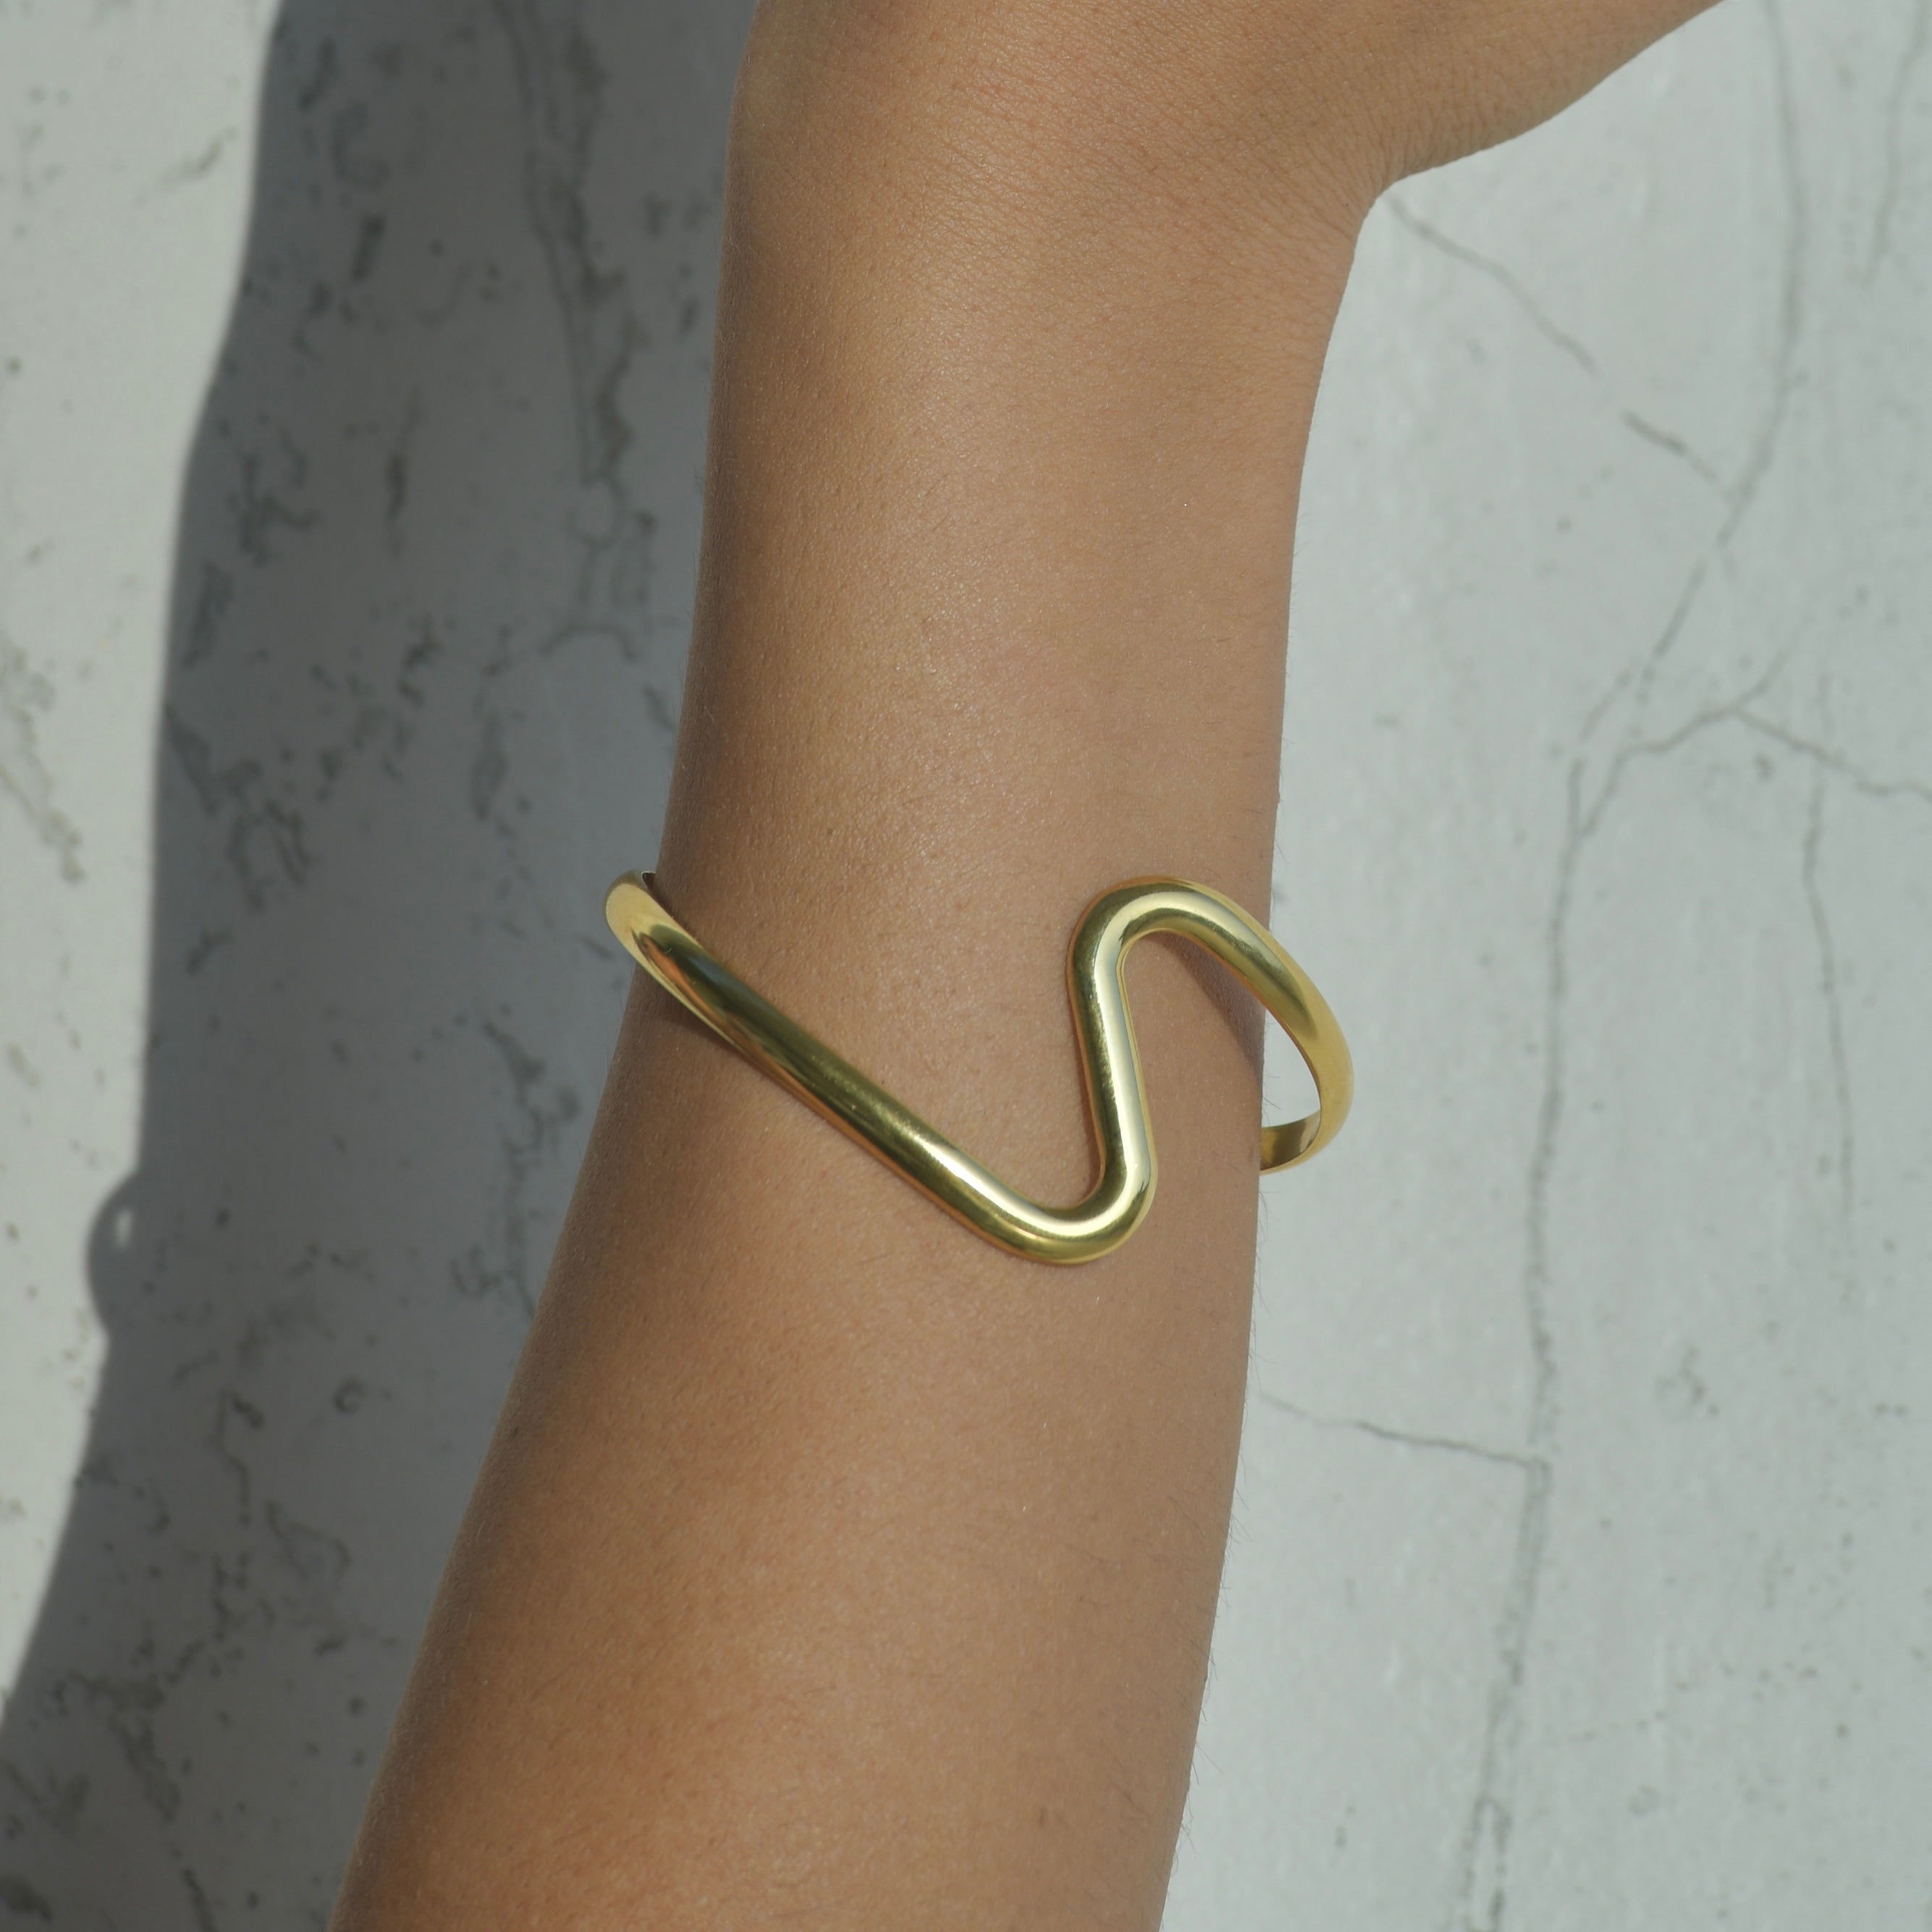 Tidal Cuff Gold Bracelet. Elegant cuff bracelet with a wave shape in the middle of the bracelet.